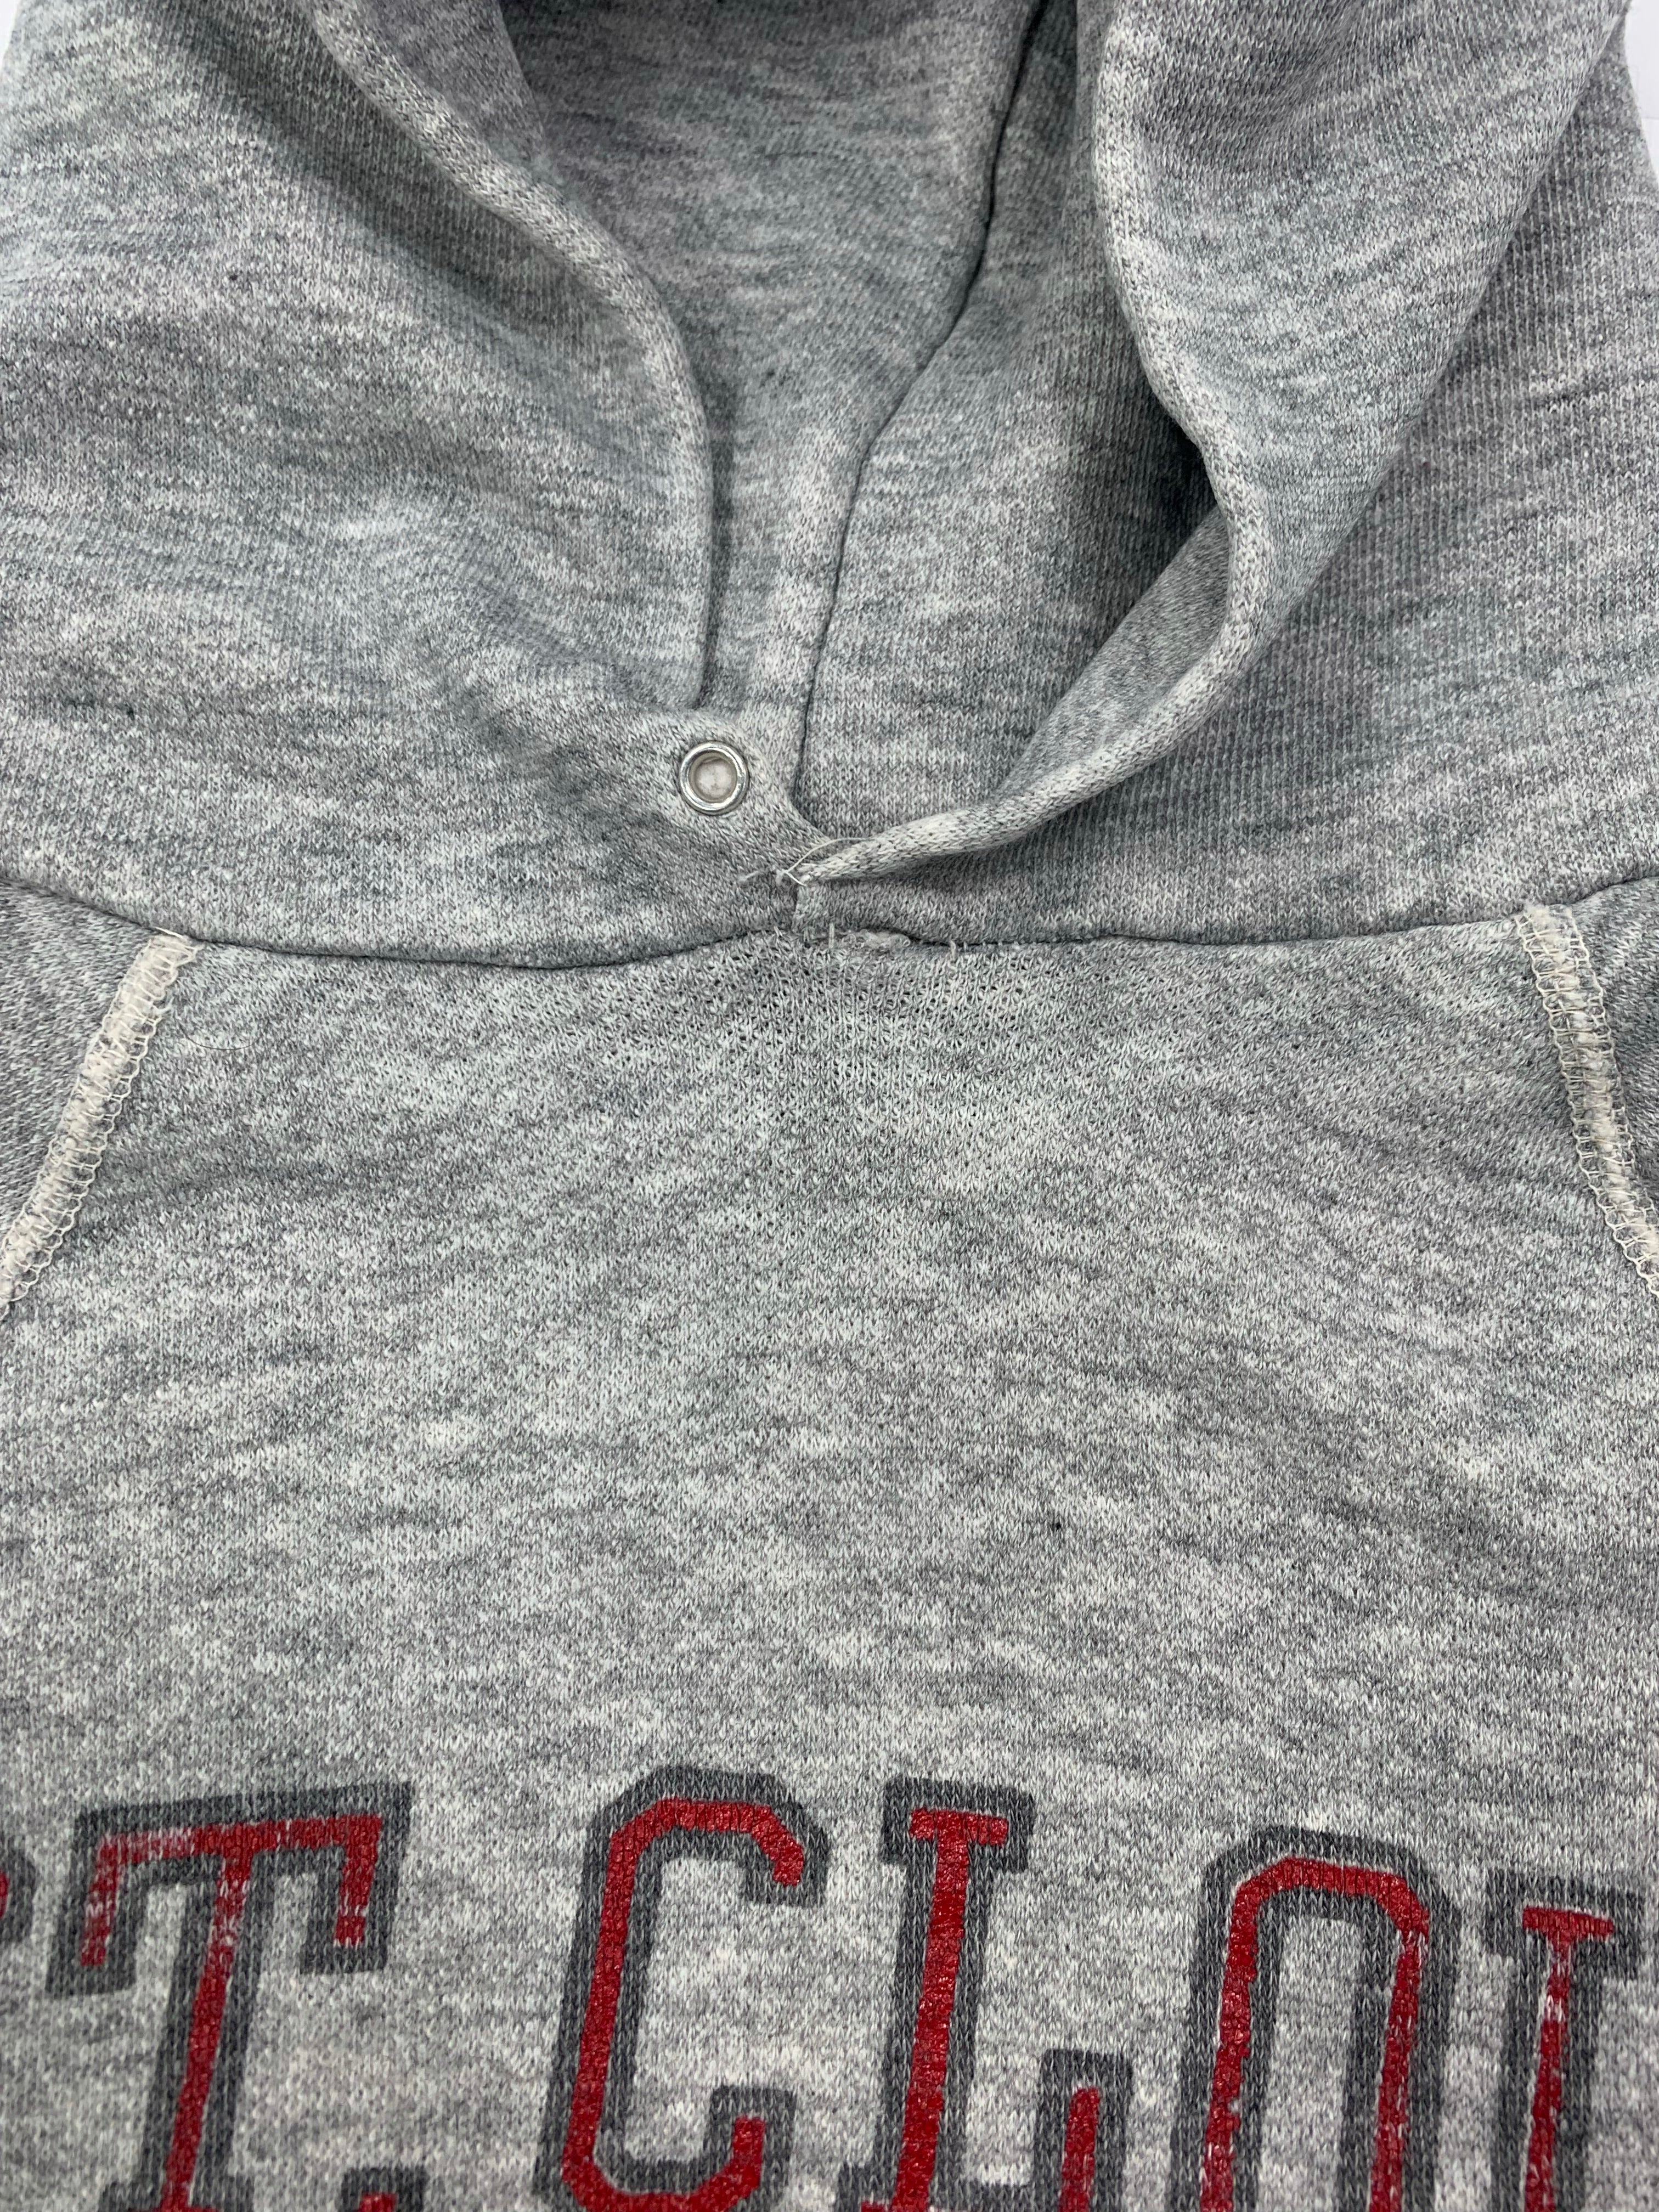 1980s St. Cloud State Collegiate Raglan Cut Sweatshirt - Heather Grey/Red - S/M